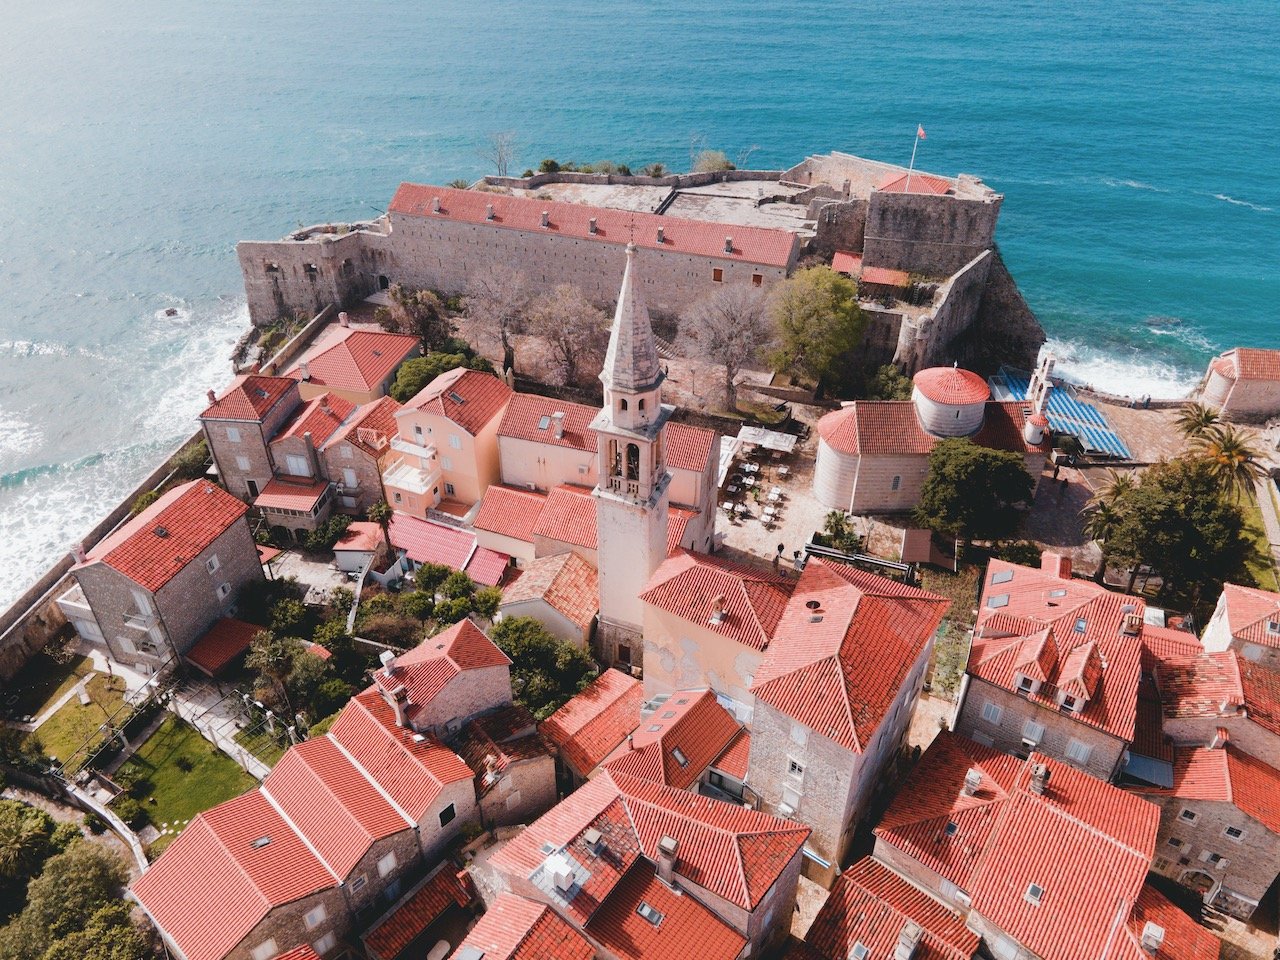   Church of St. John and Citadela Fortress, Budva, Montenegro (ISO 100, 4.5 mm,  f /2.8, 1/40 s)  